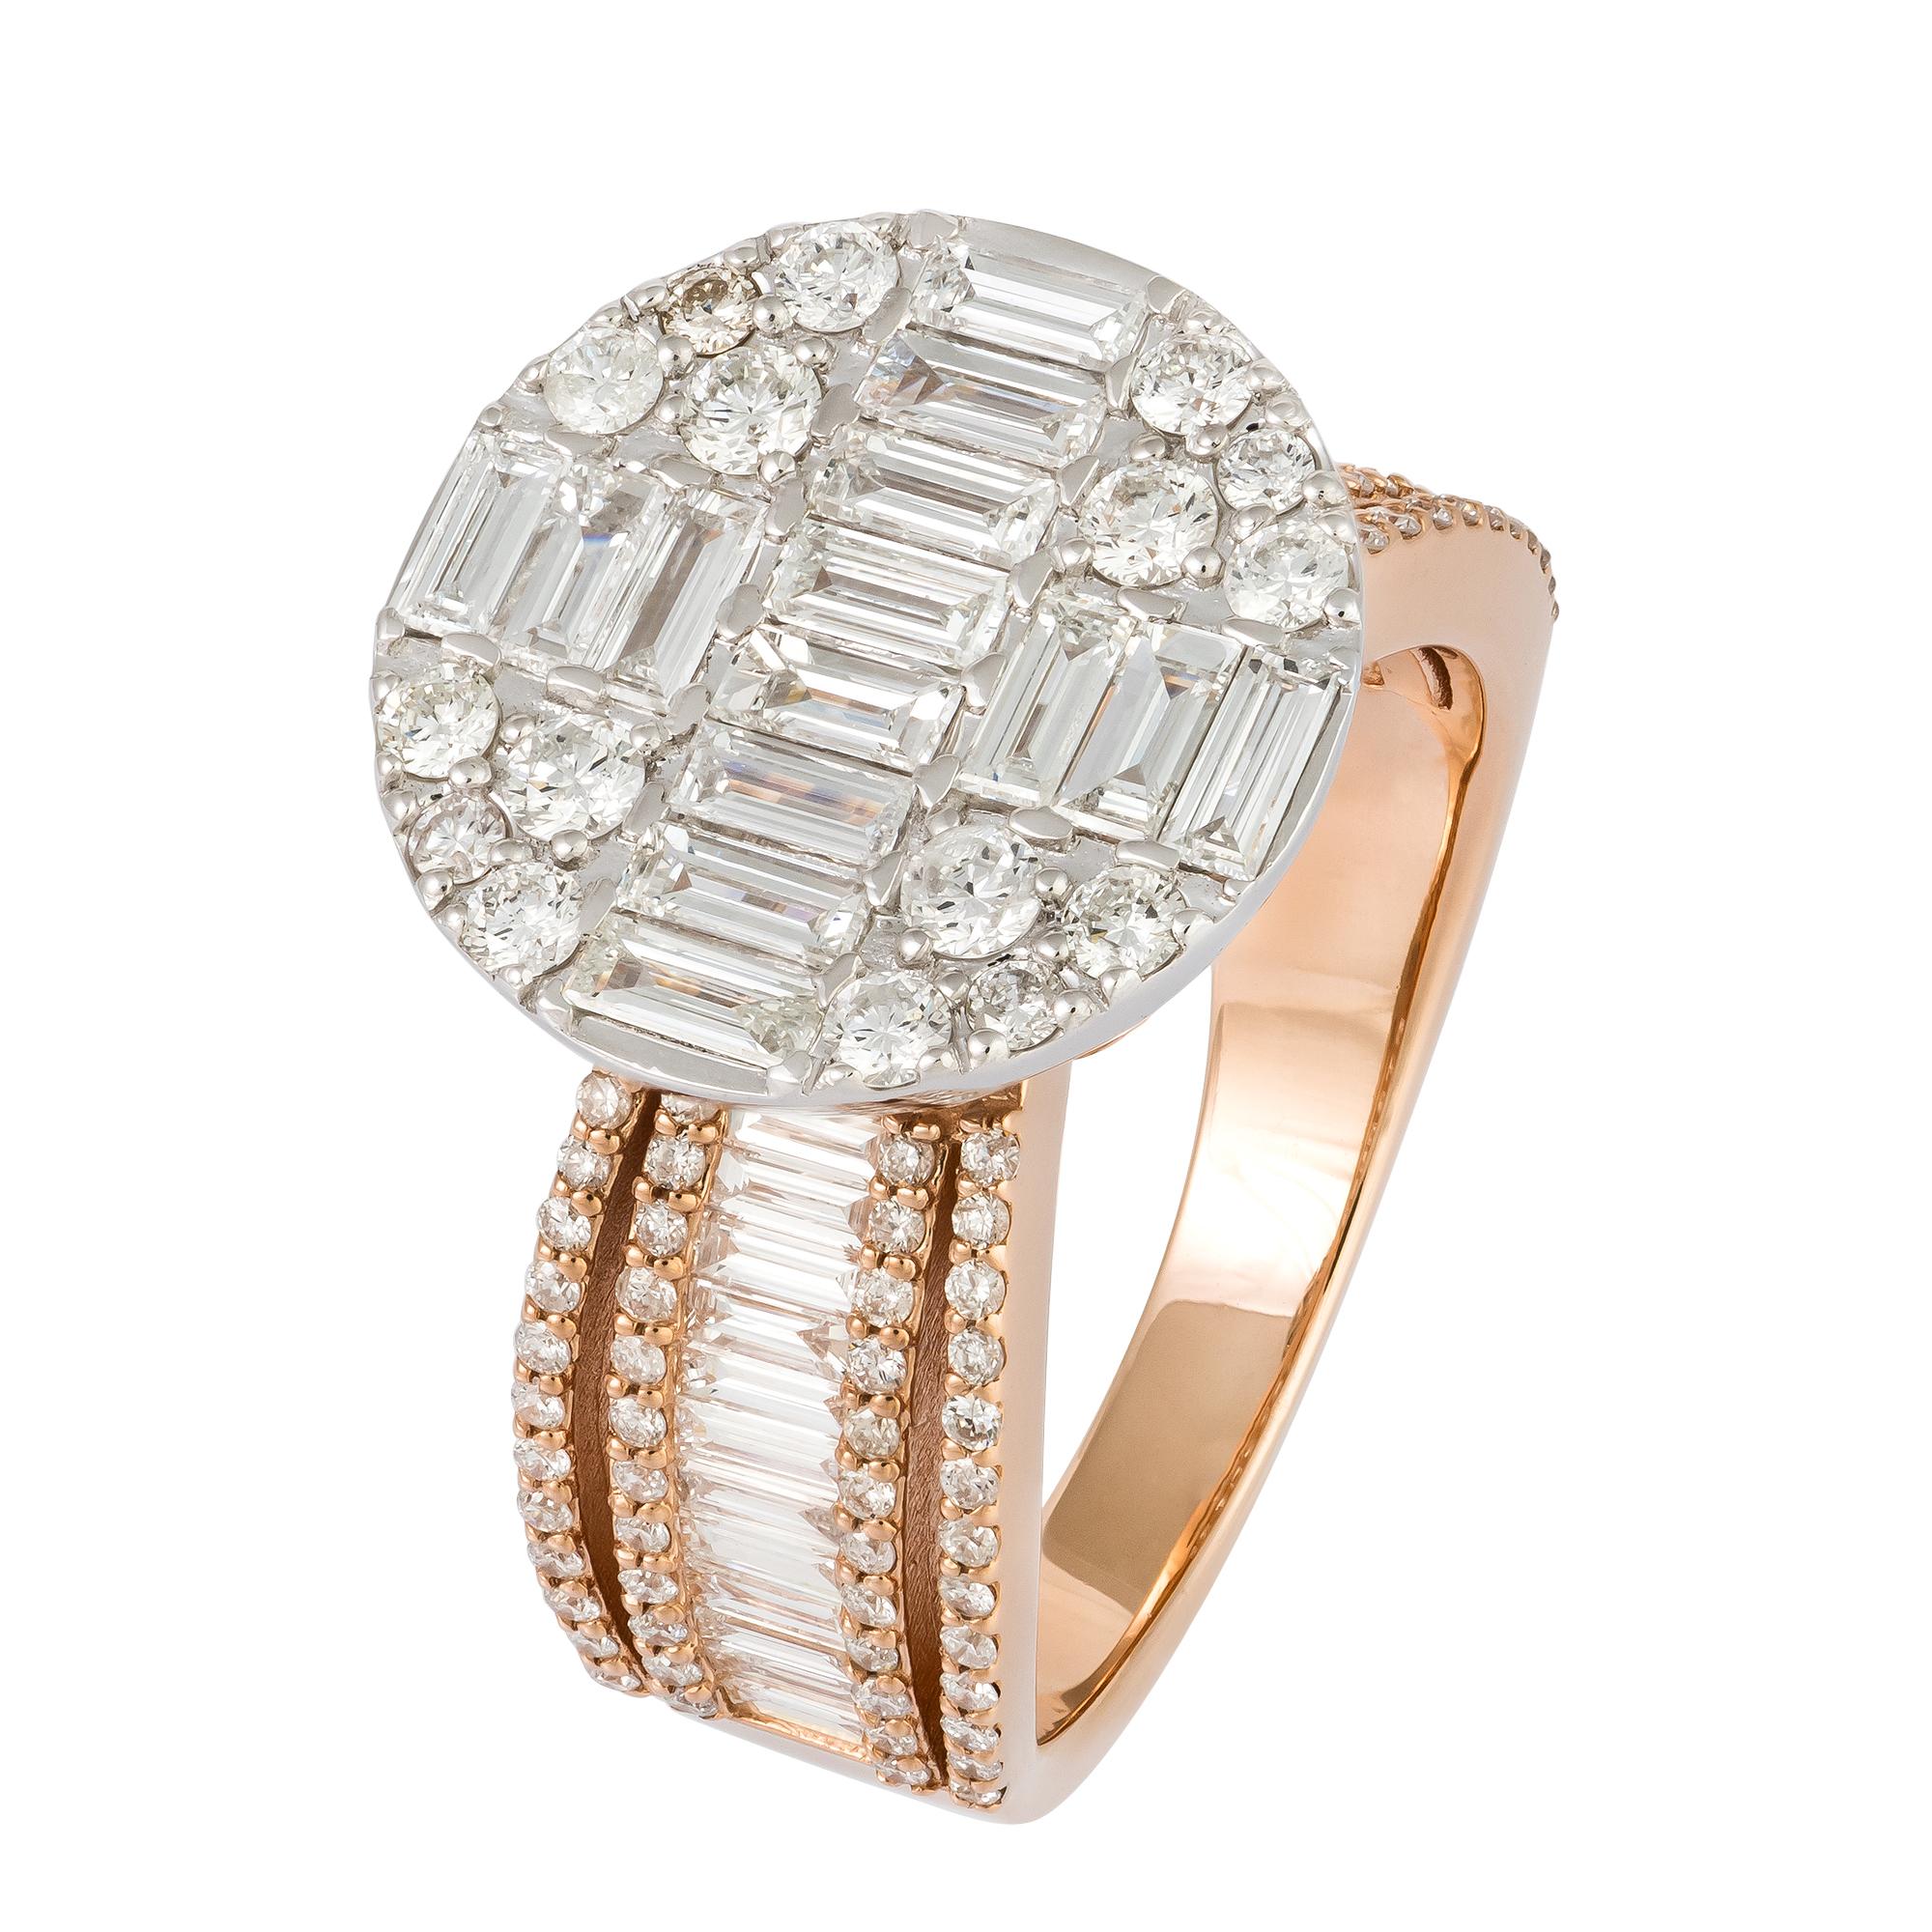 For Sale:  Breathtaking  White Pink 18K Gold White Diamond Ring For Her 2